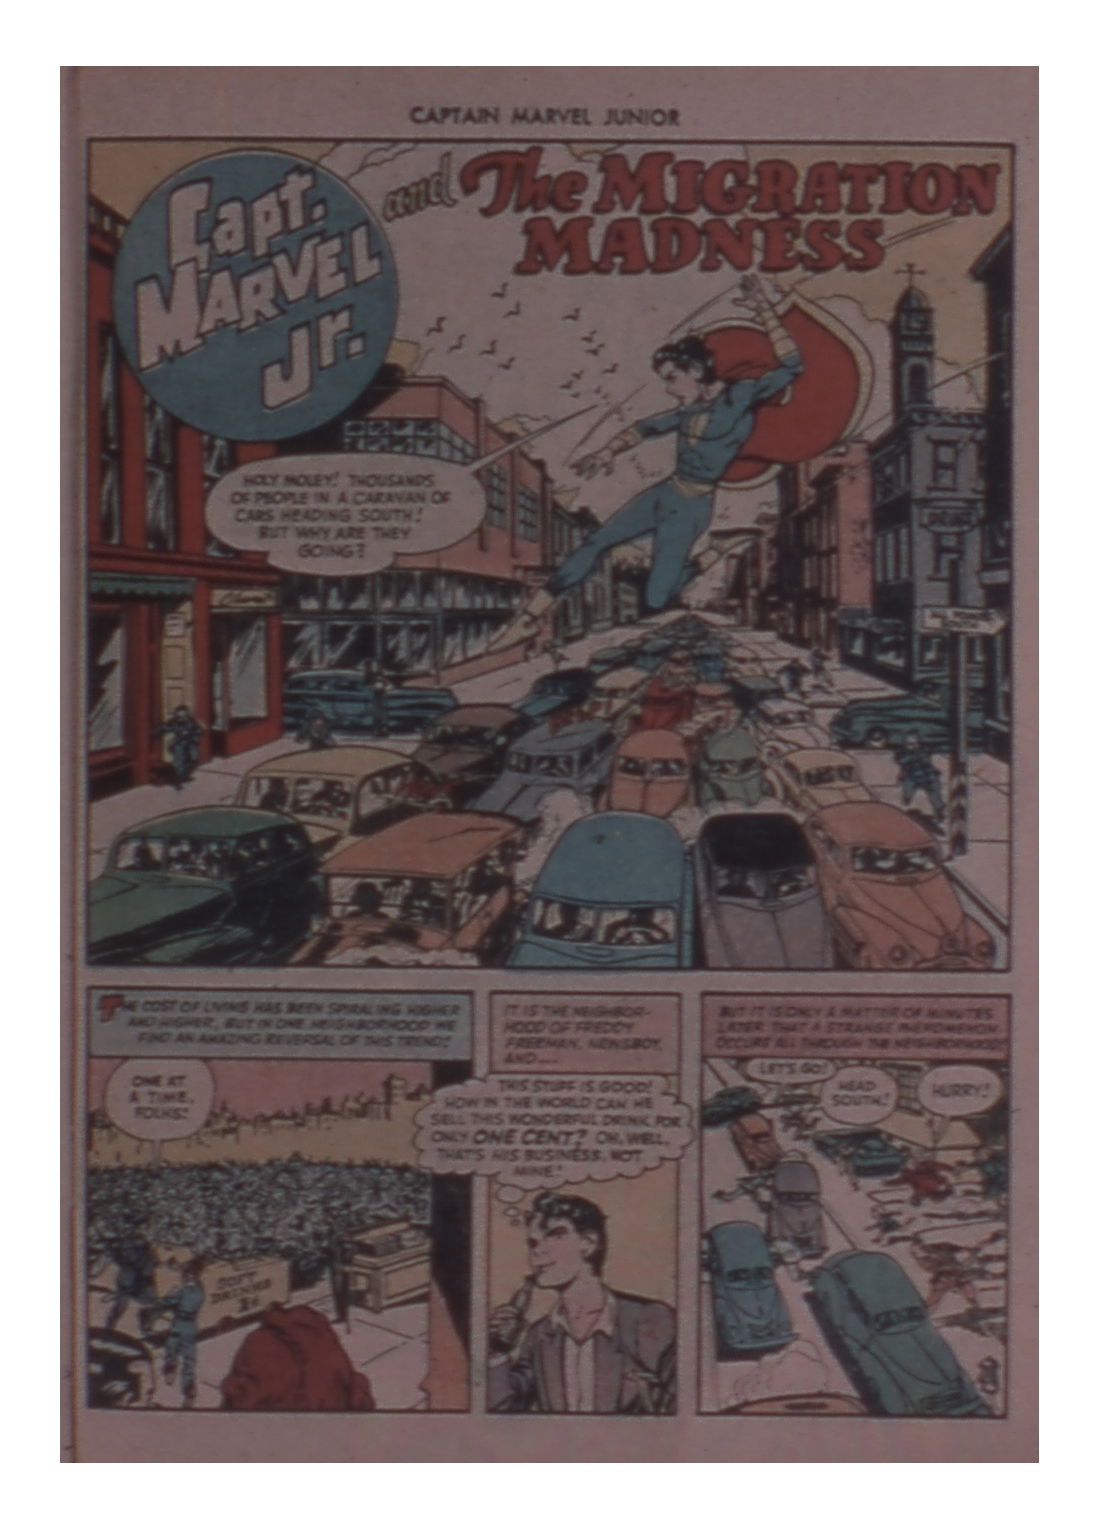 Read online Captain Marvel, Jr. comic -  Issue #74 - 15